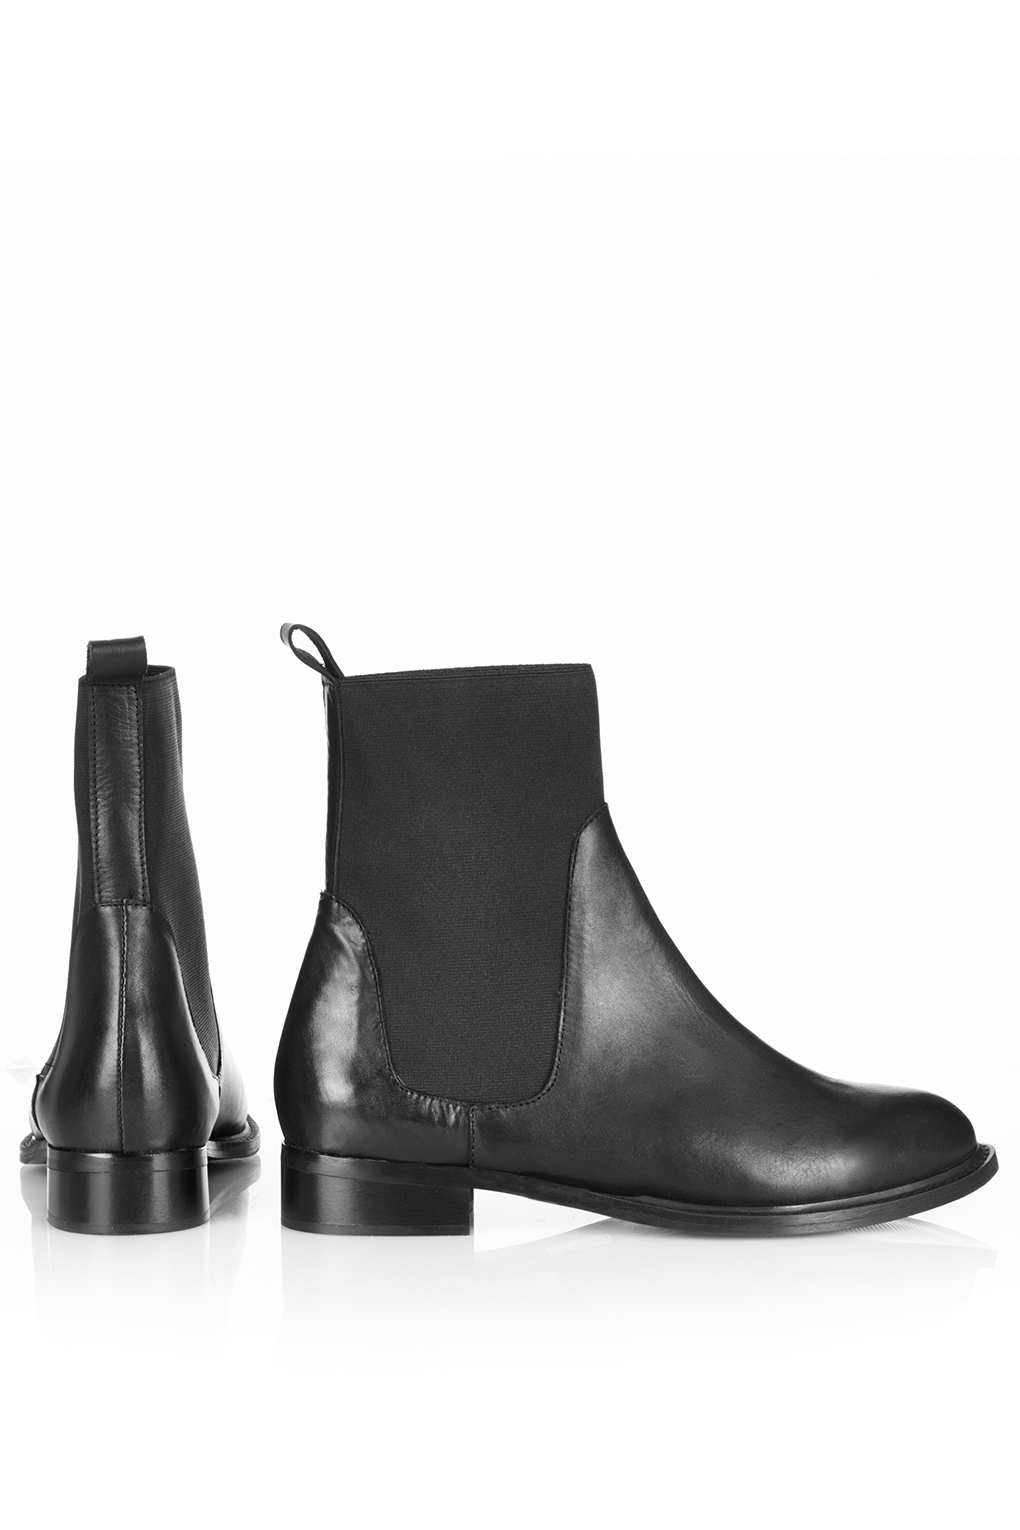 Lyst - Topshop Alite Elastic Chelsea Boots in Black